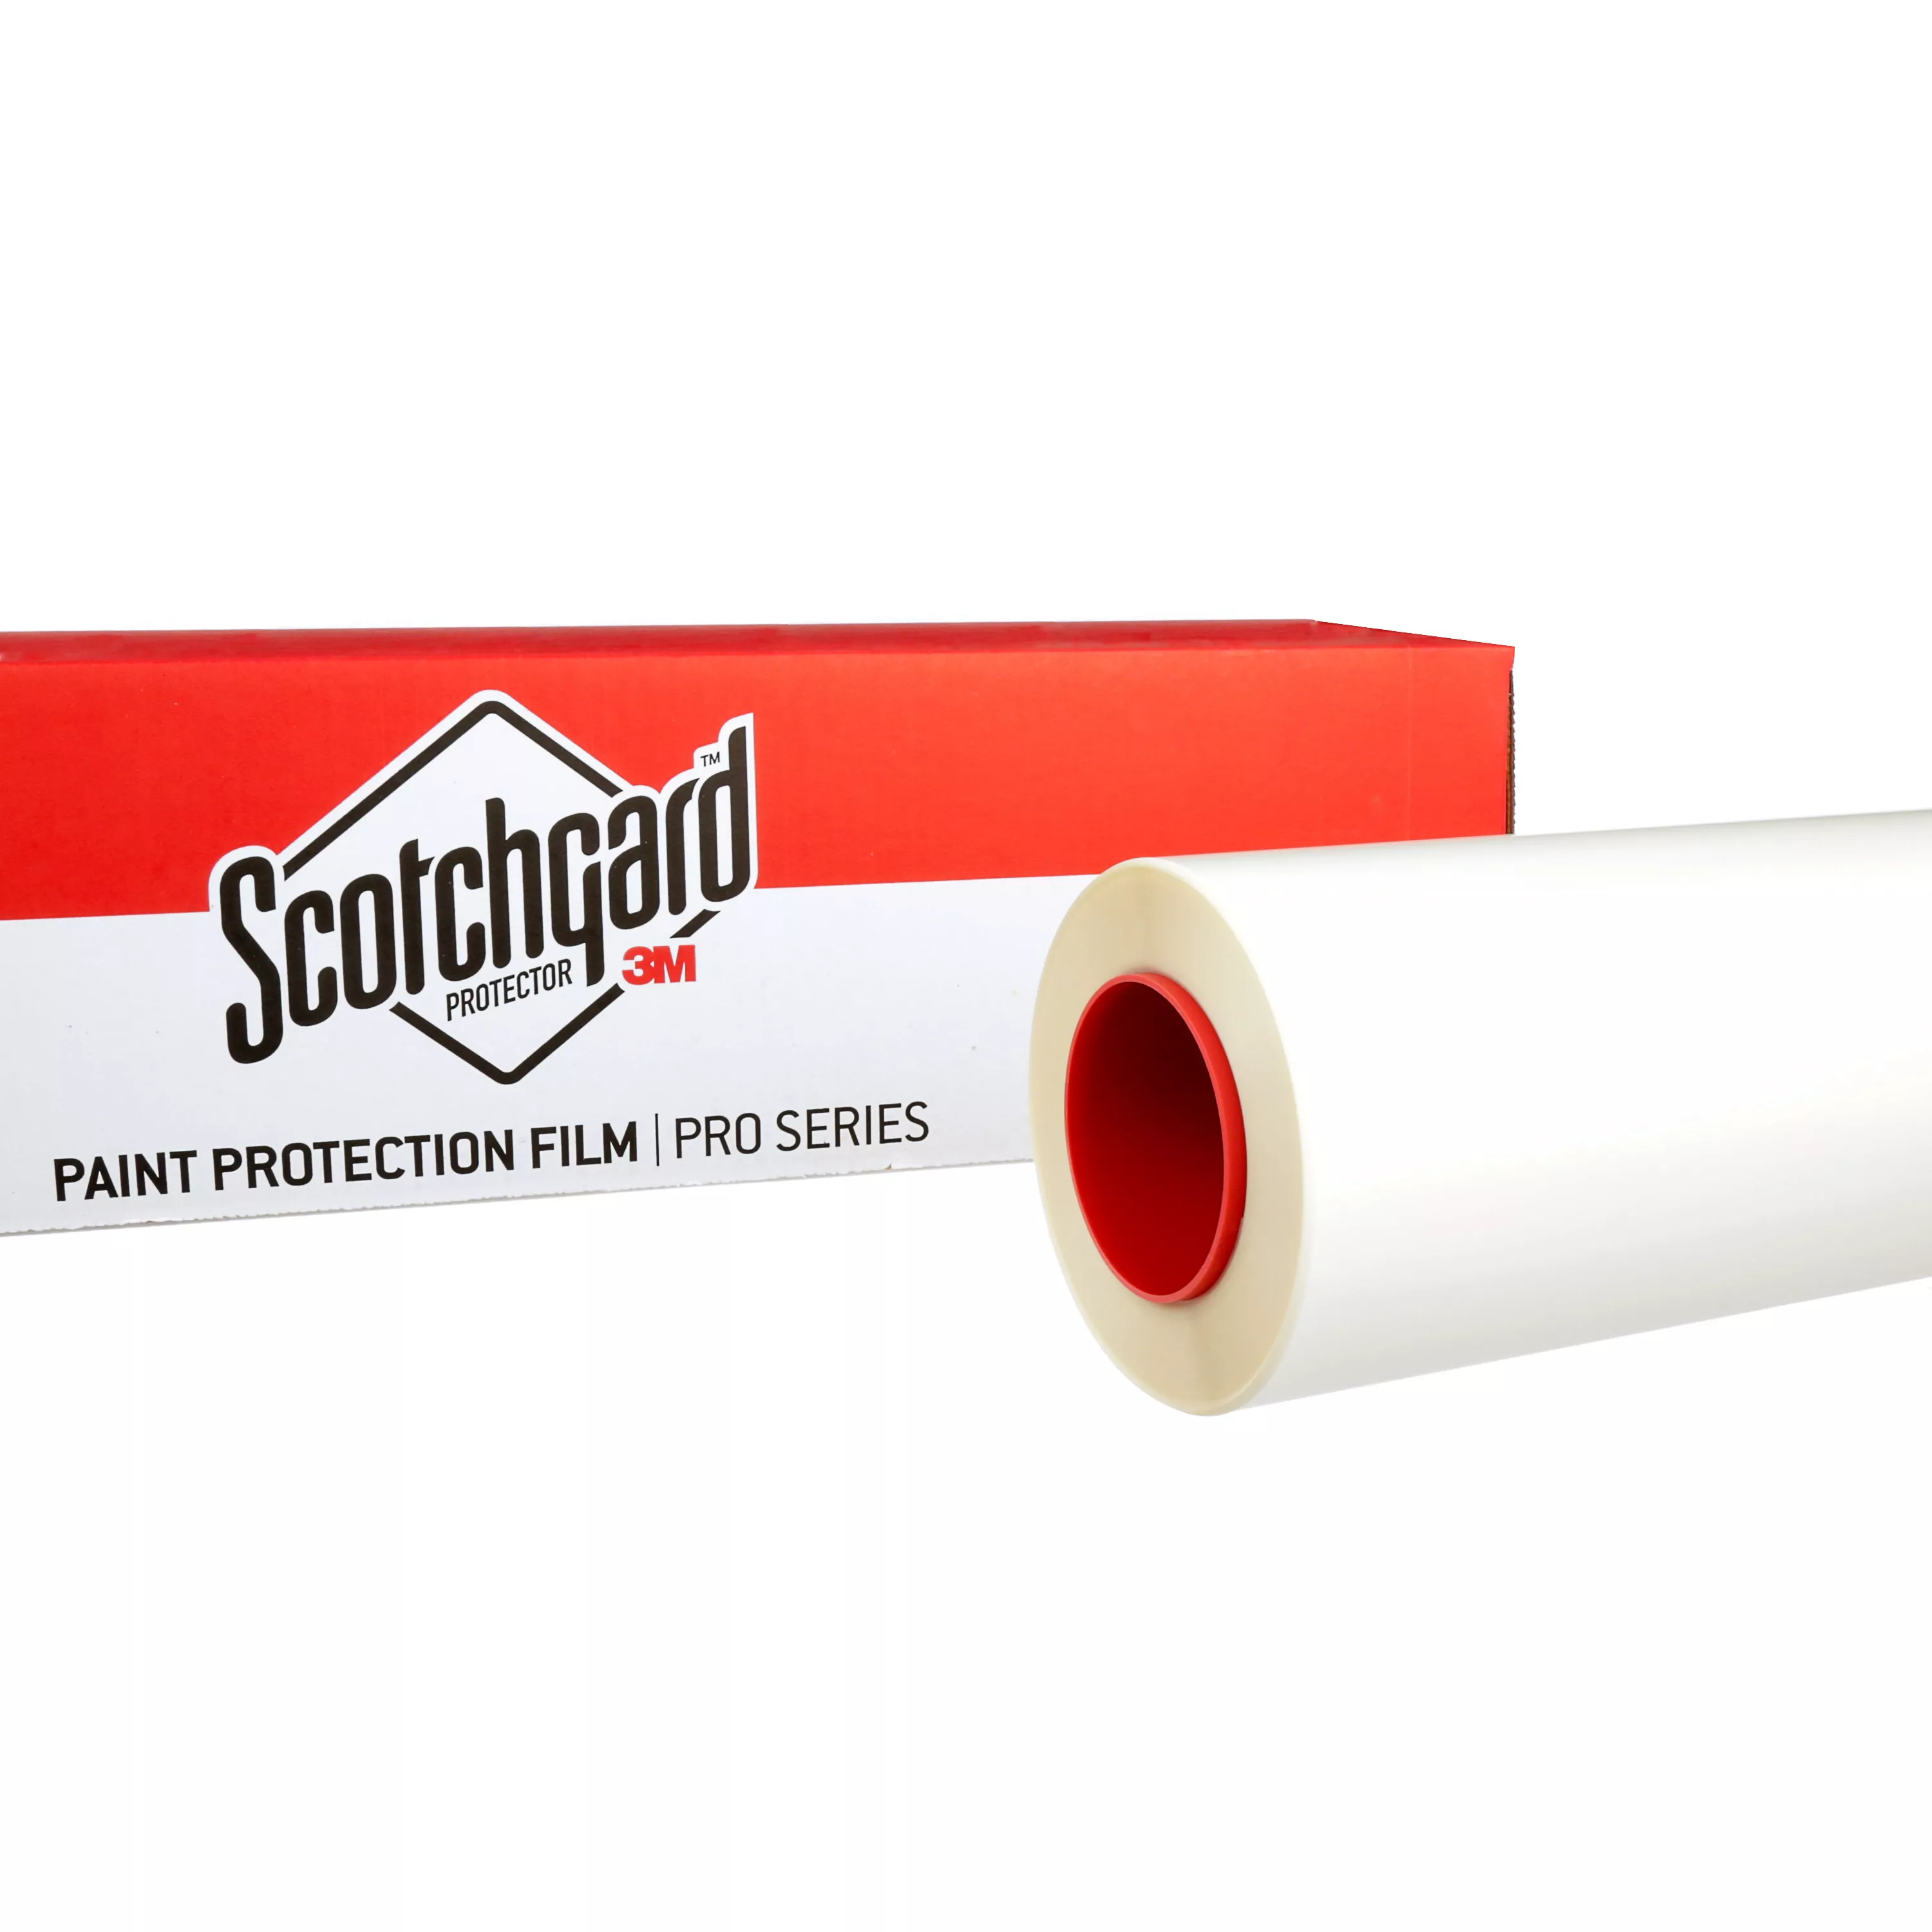 Scotchgard™ Paint Protection Film Pro Series, SGH6PRO, 96030, 8 mil,
Transparent, No Cap Sheet, 30 in x 100 ft